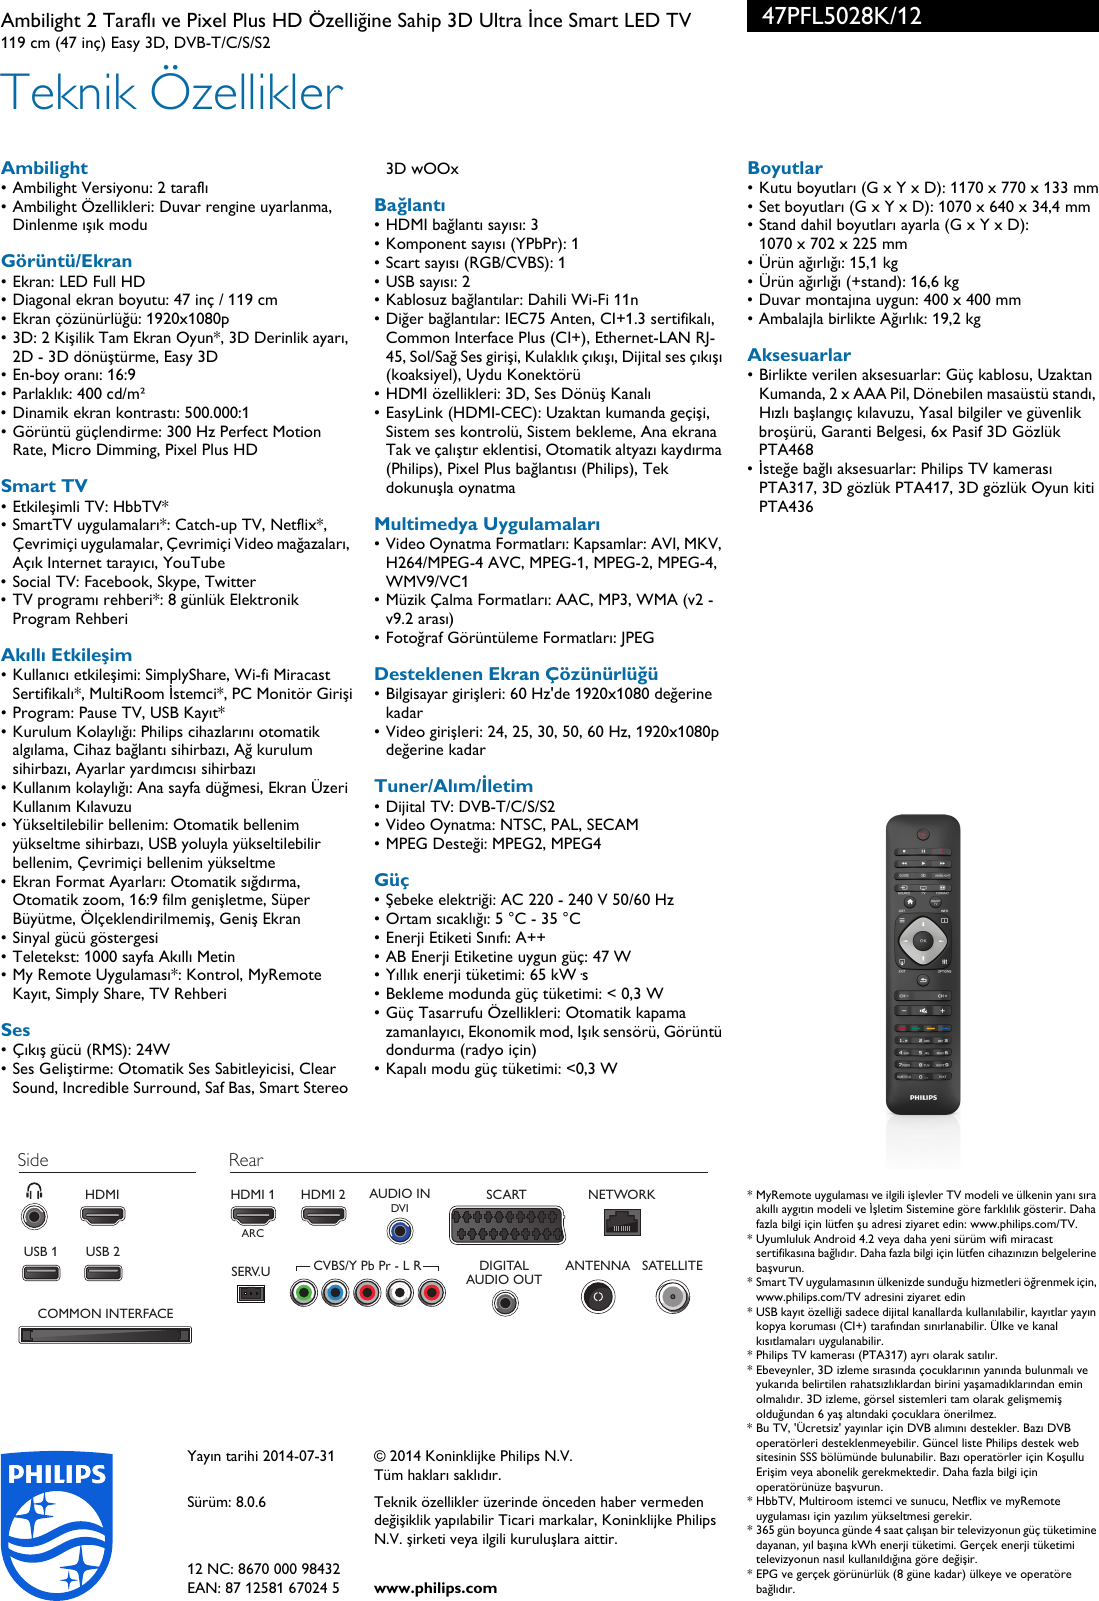 Page 3 of 3 - Philips 47PFL5028K/12 Ambilight 2 Taraflı Ve Pixel Plus HD Özelliğine Sahip 3D Ultra İnce Smart LED TV User Manual Broşür 47pfl5028k 12 Pss Turtr